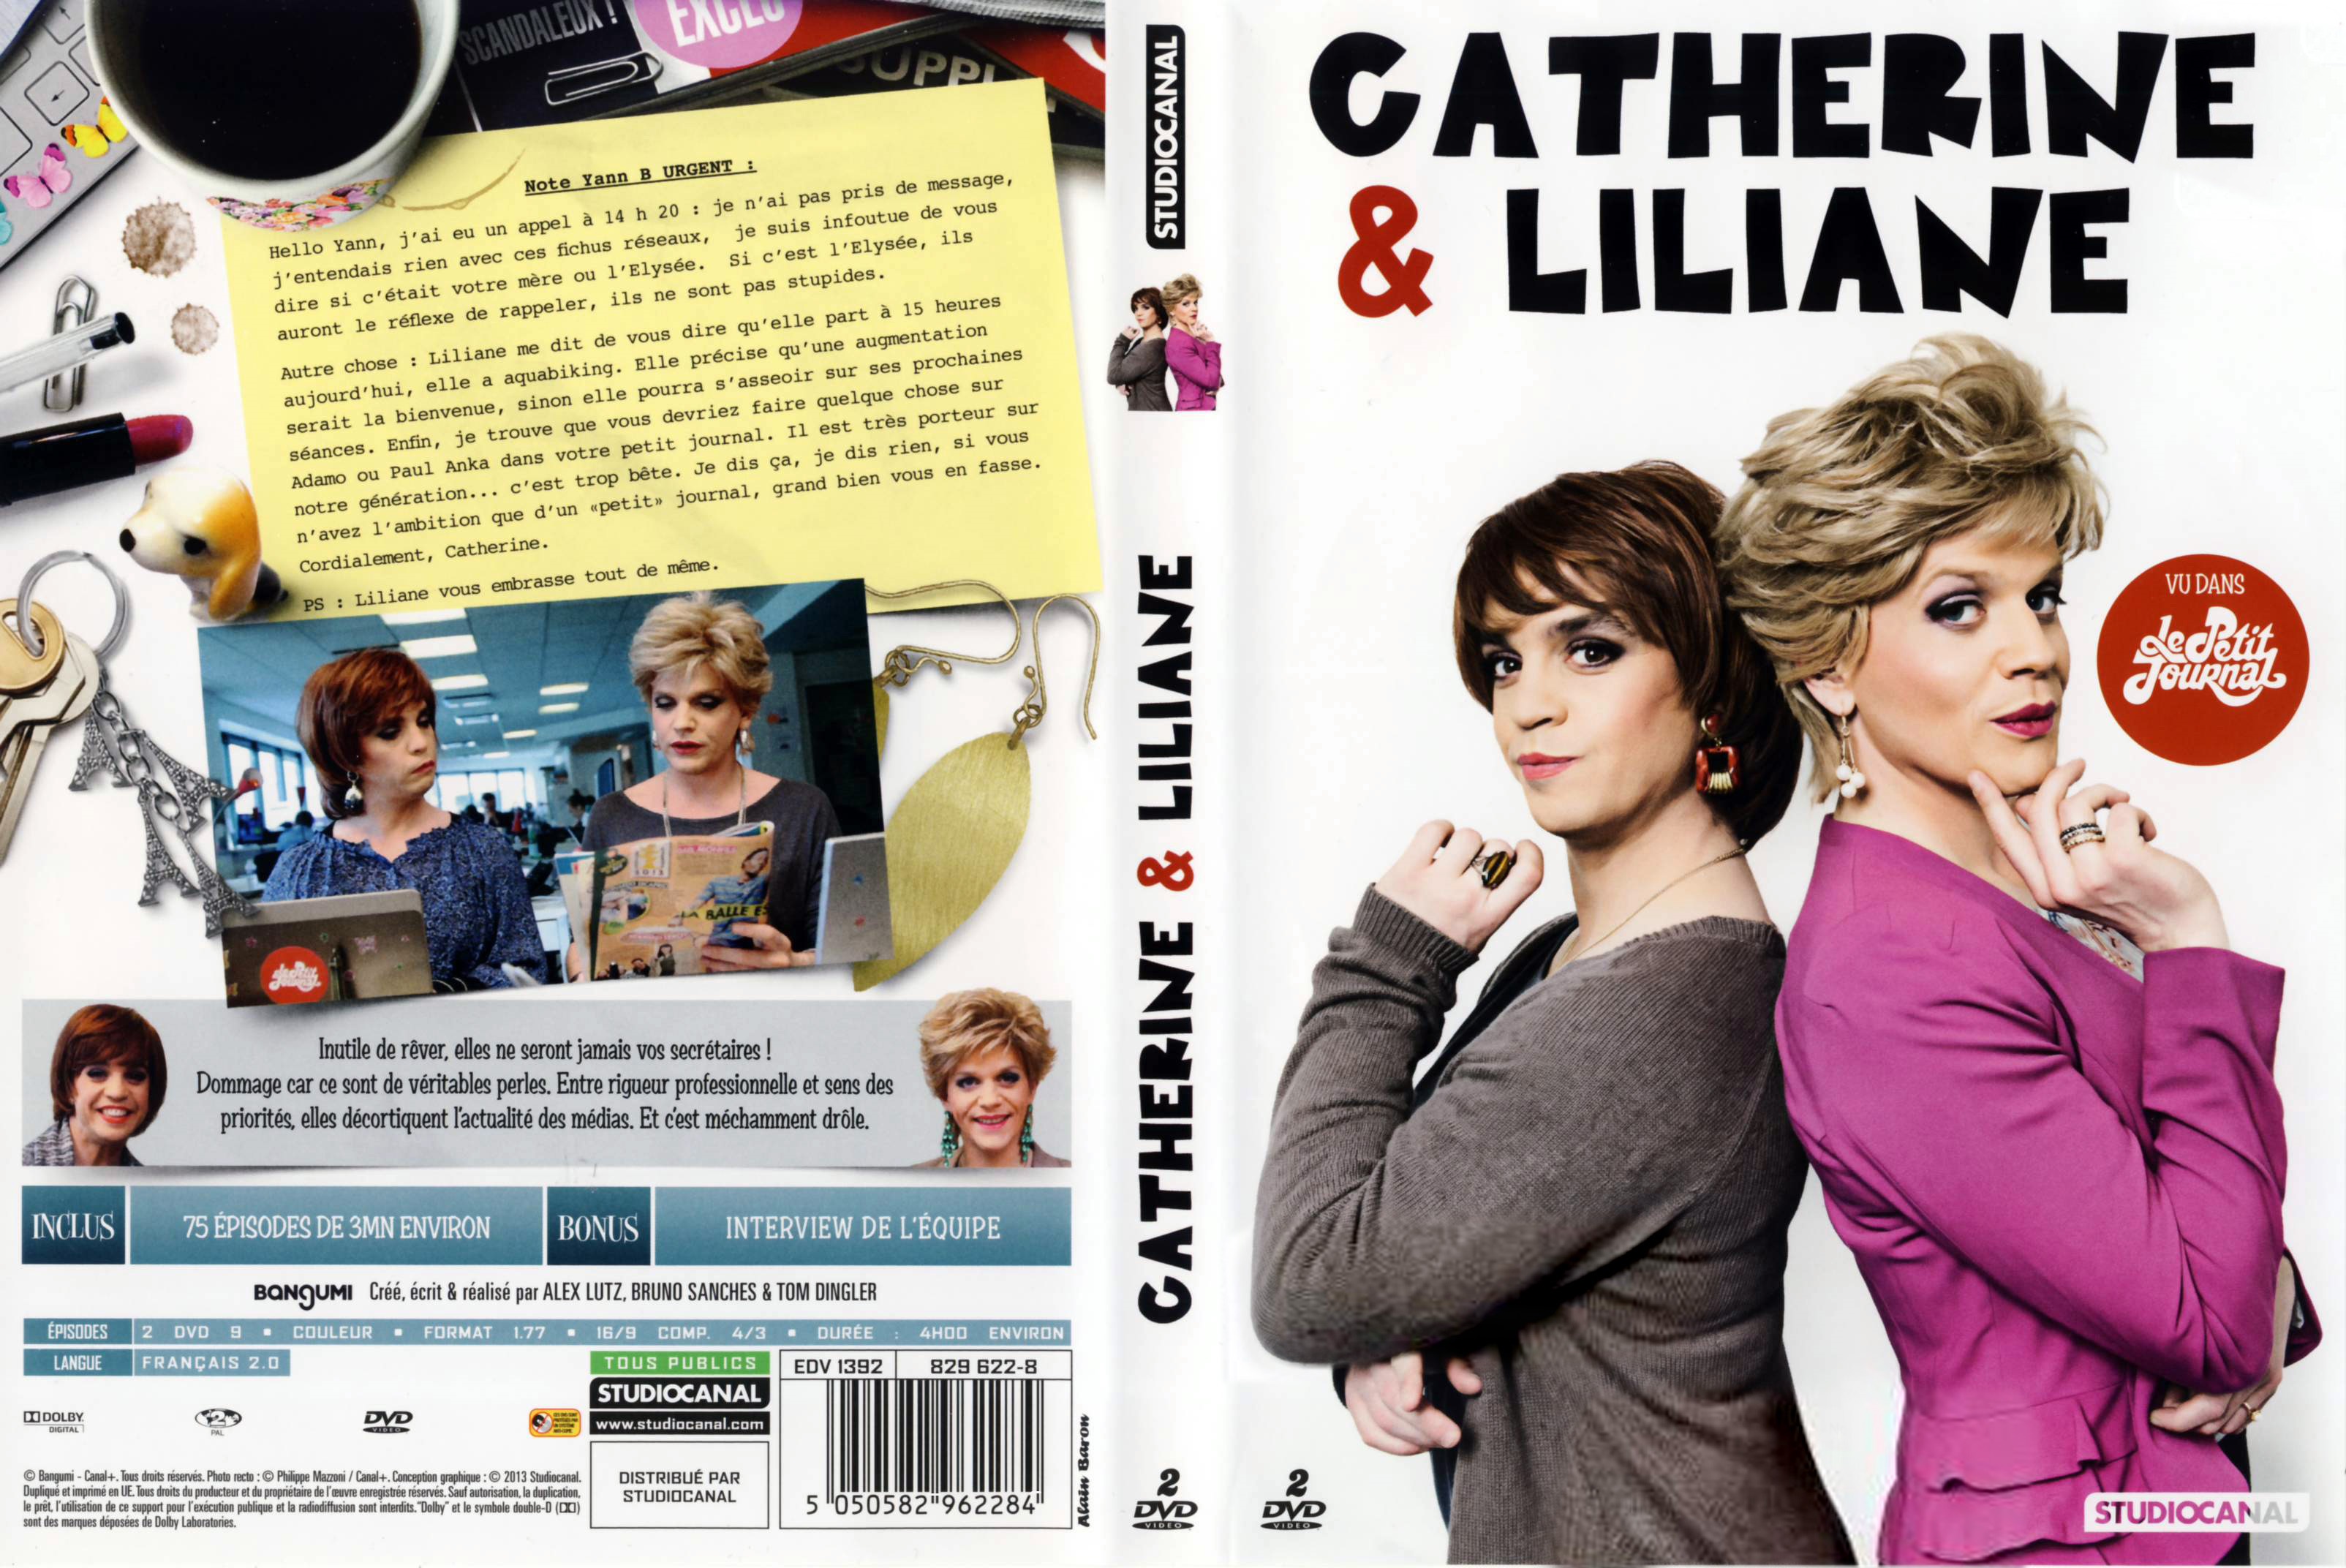 Jaquette DVD Catherine & Liliane